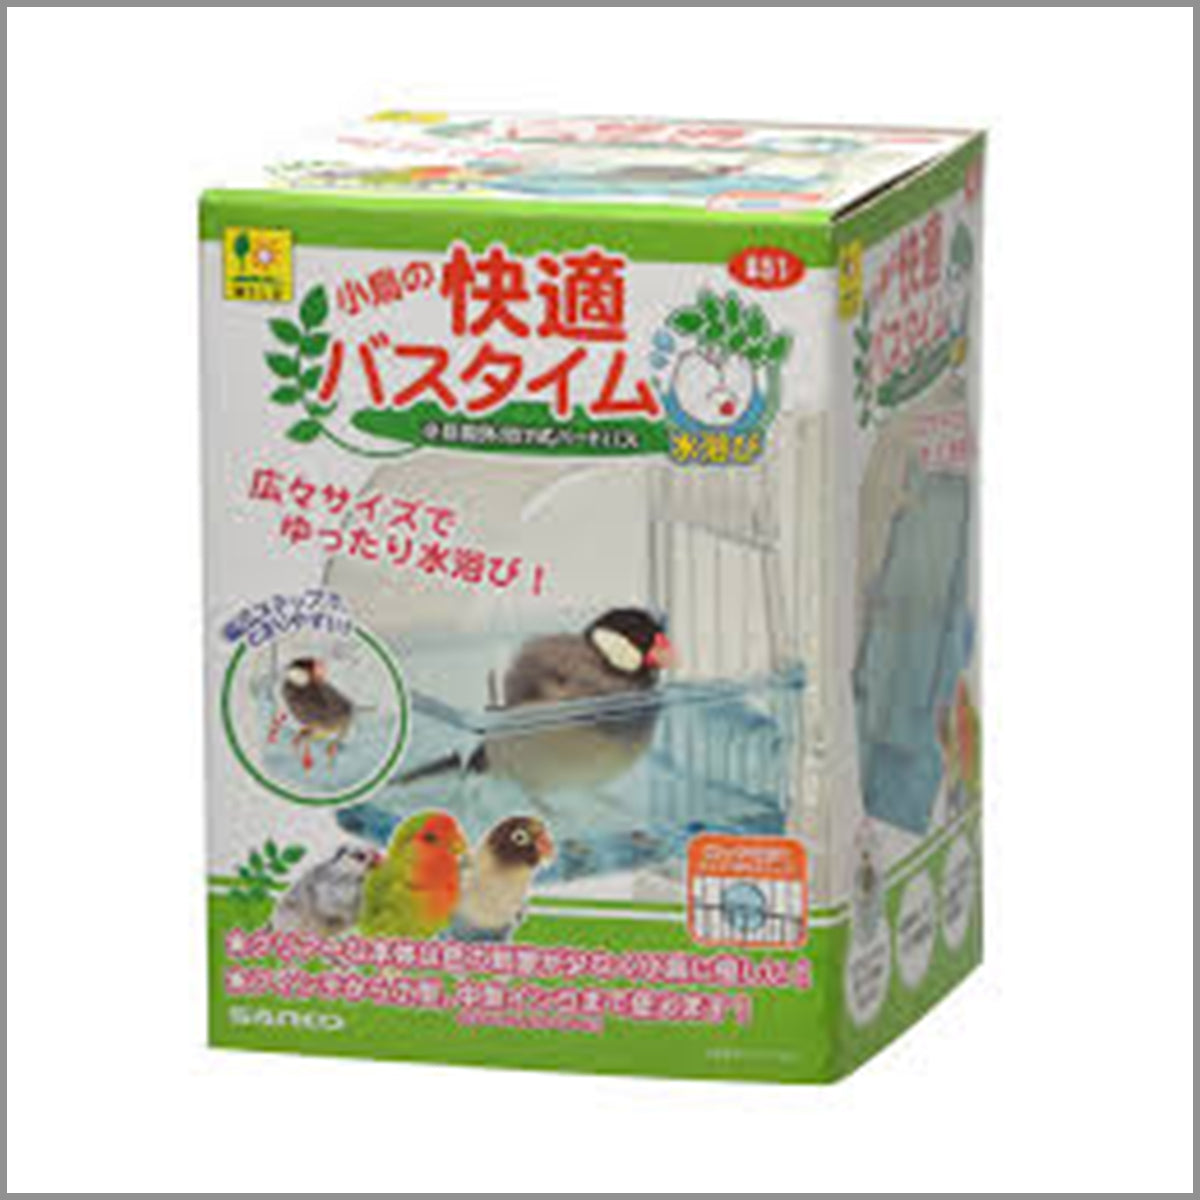 SANKO Comfortable bath time for a littlr bird_小鳥沐浴器皿